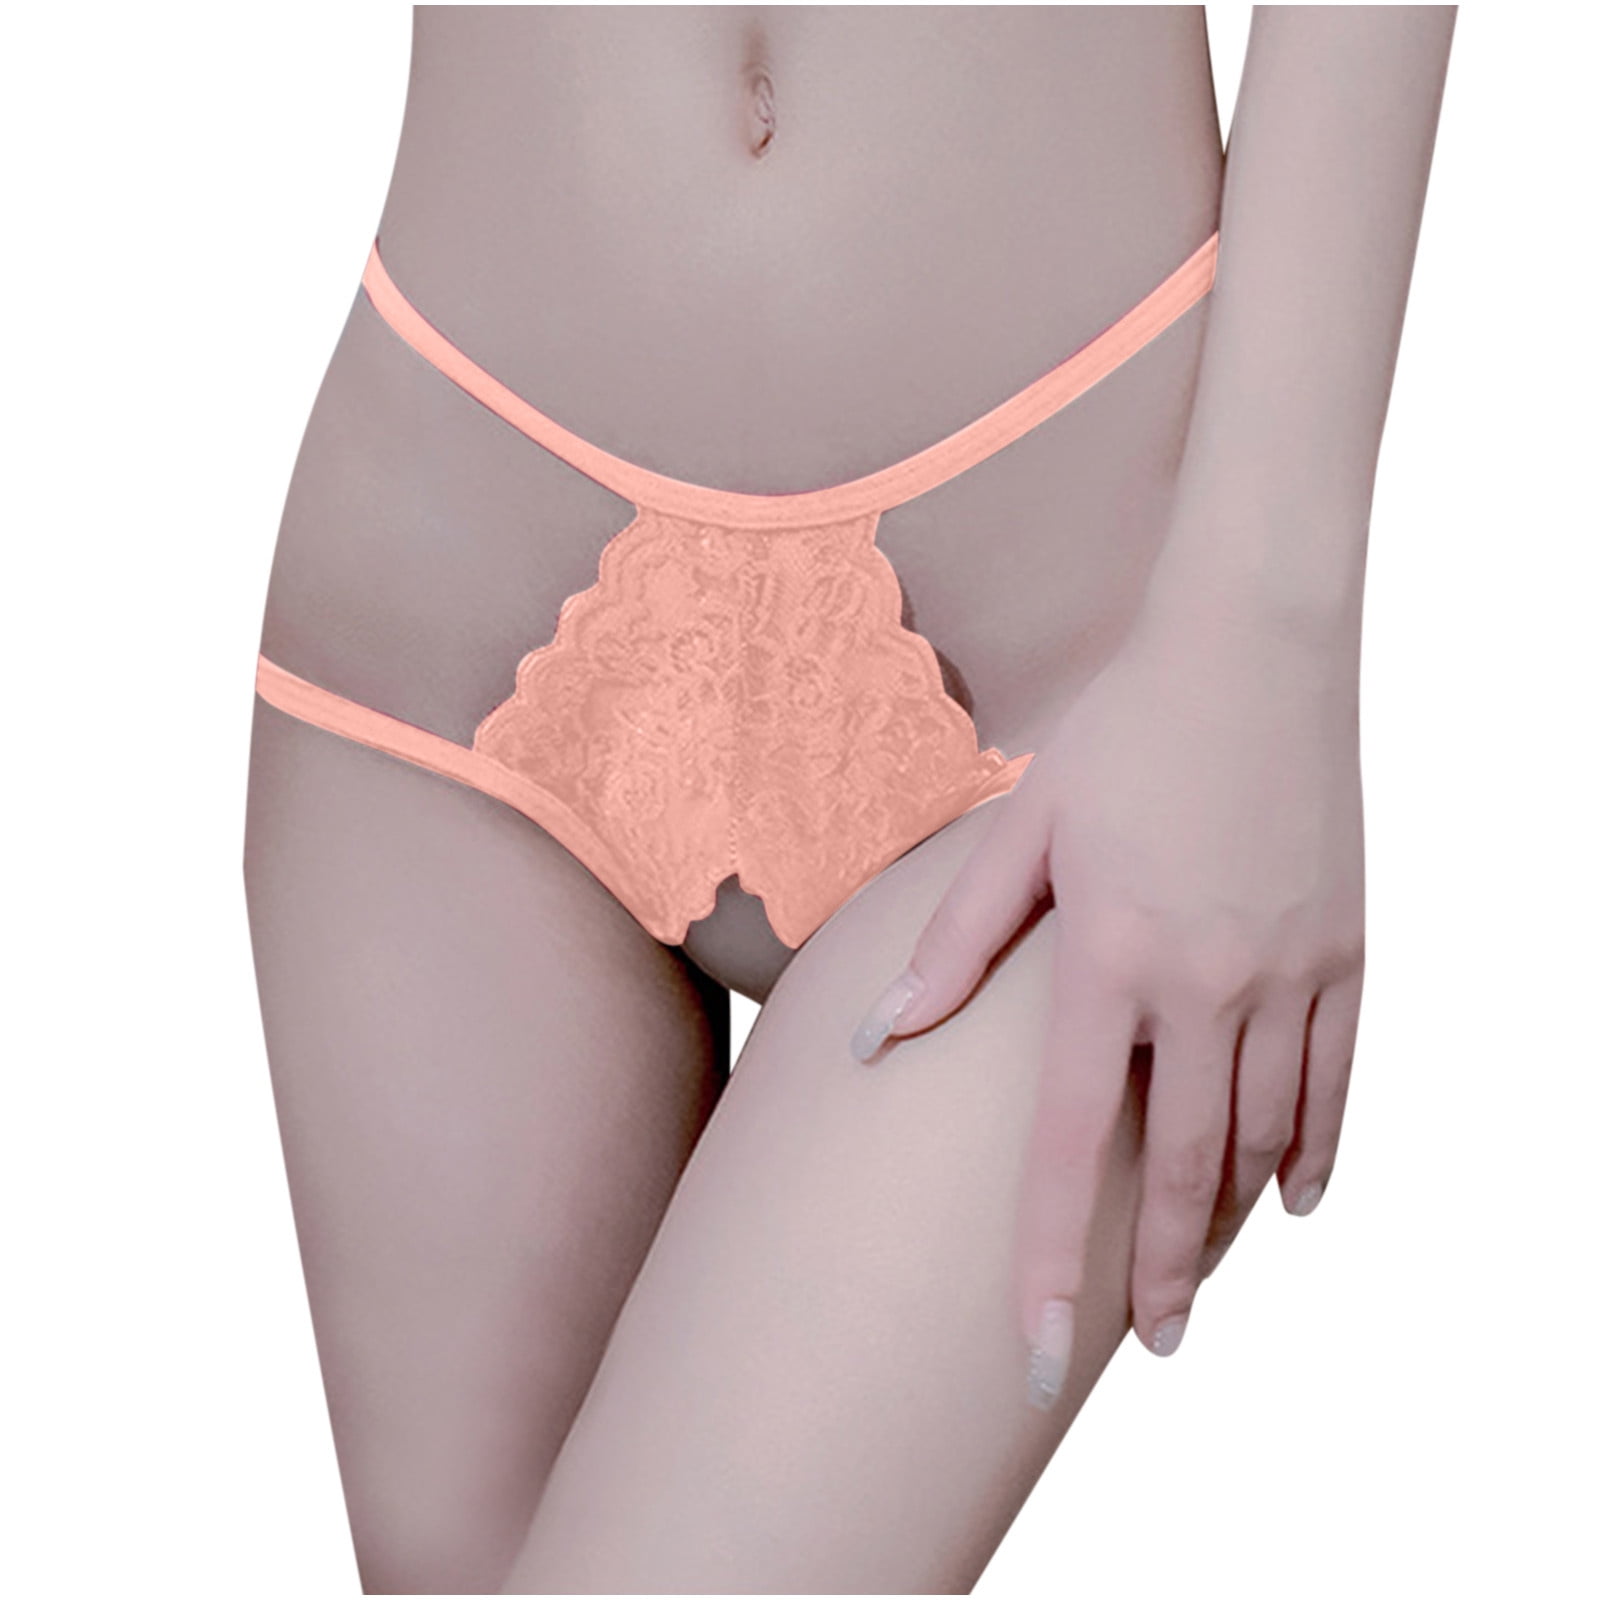 VBXOAE Women's Sexy Cut Out Lace Thongs Underwear Panties 